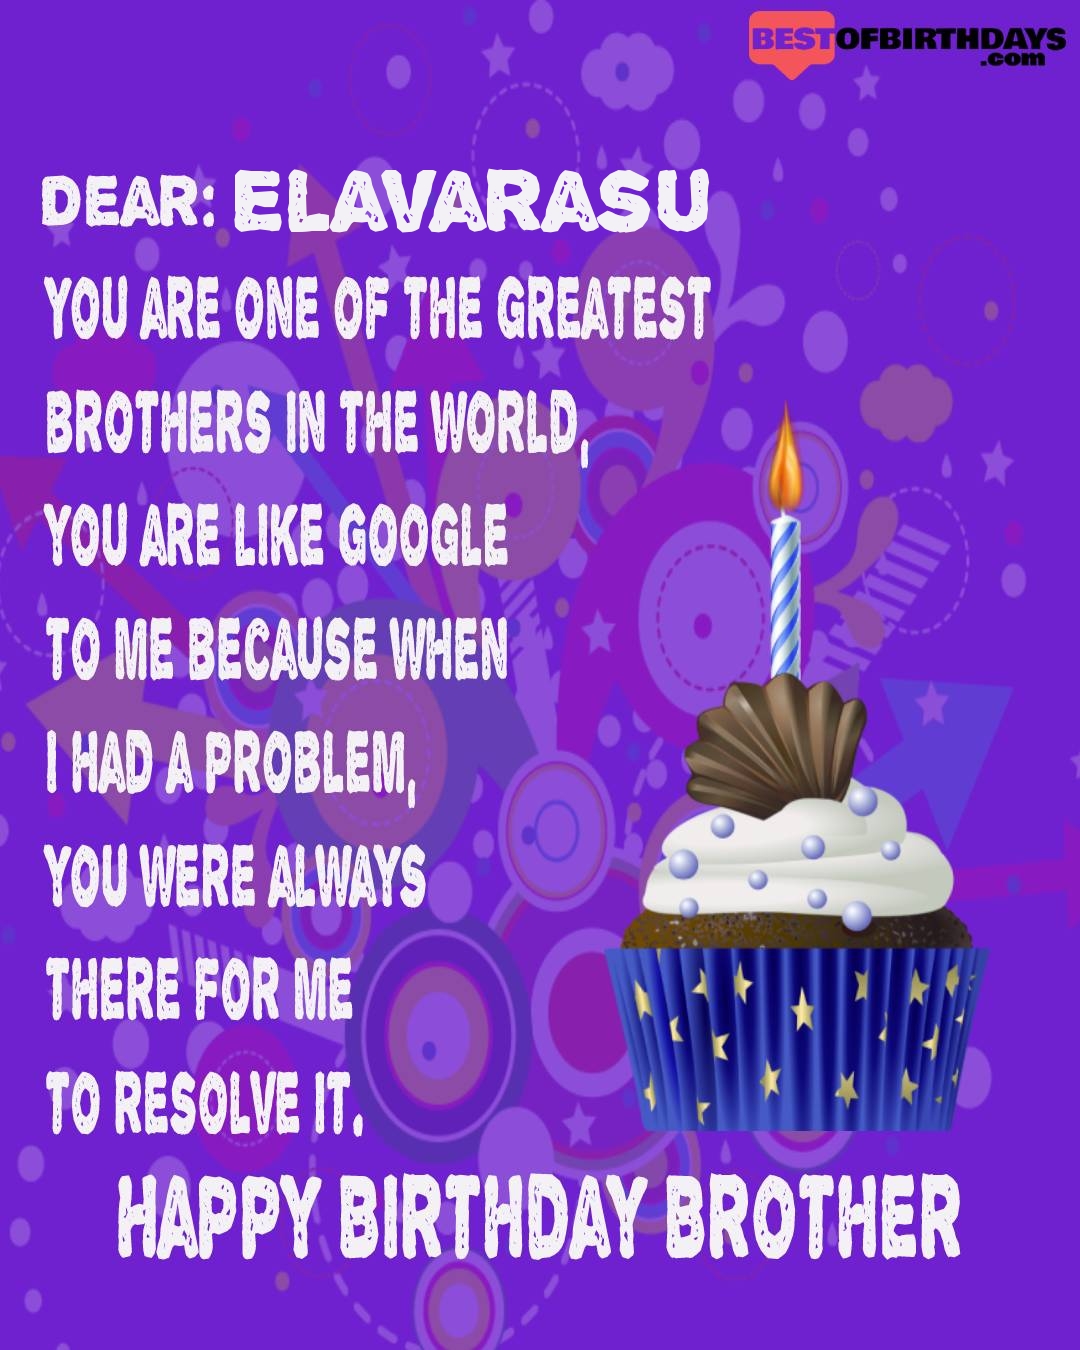 Happy birthday elavarasu bhai brother bro